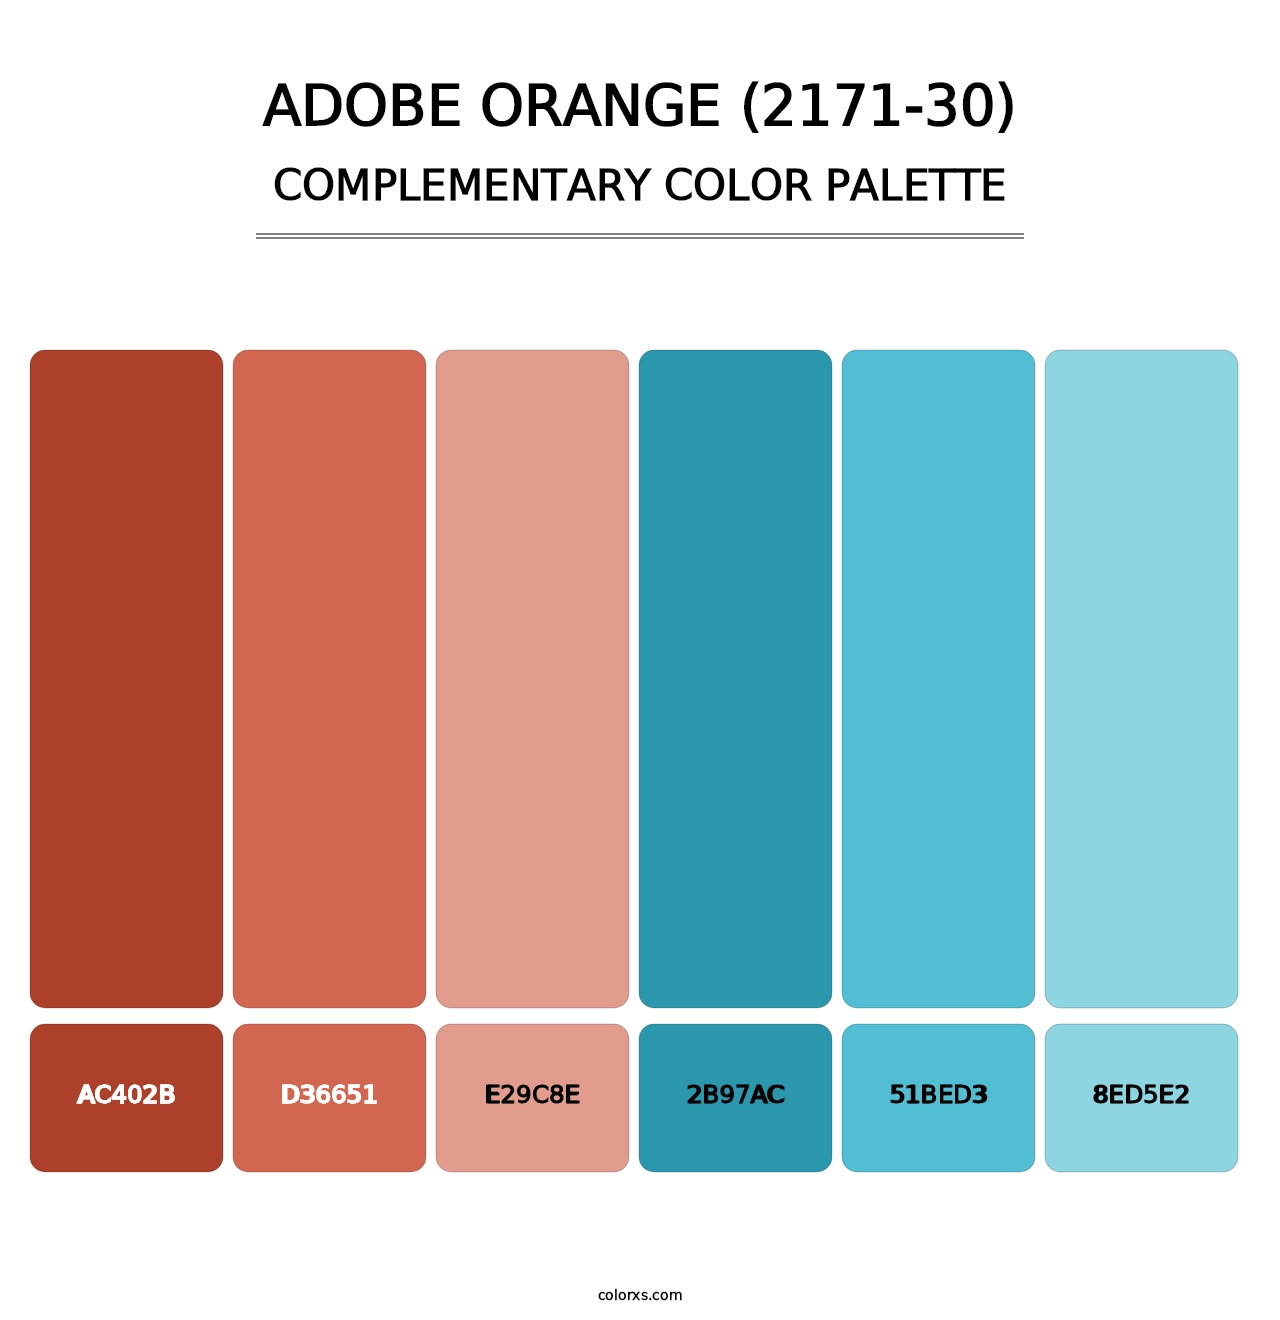 Adobe Orange (2171-30) - Complementary Color Palette